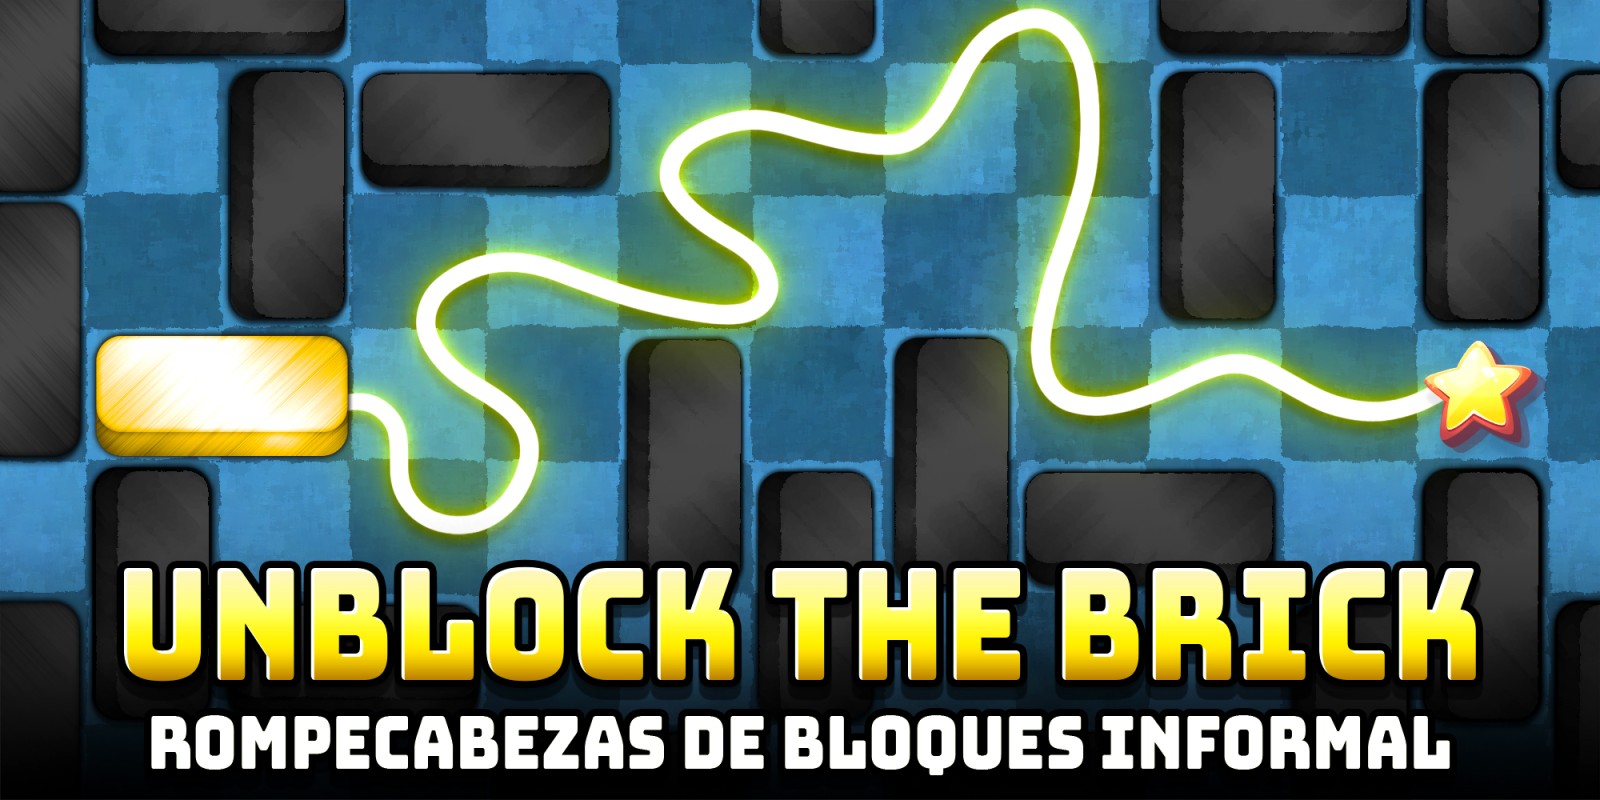 Unblock The Brick: Rompecabezas de bloques informal